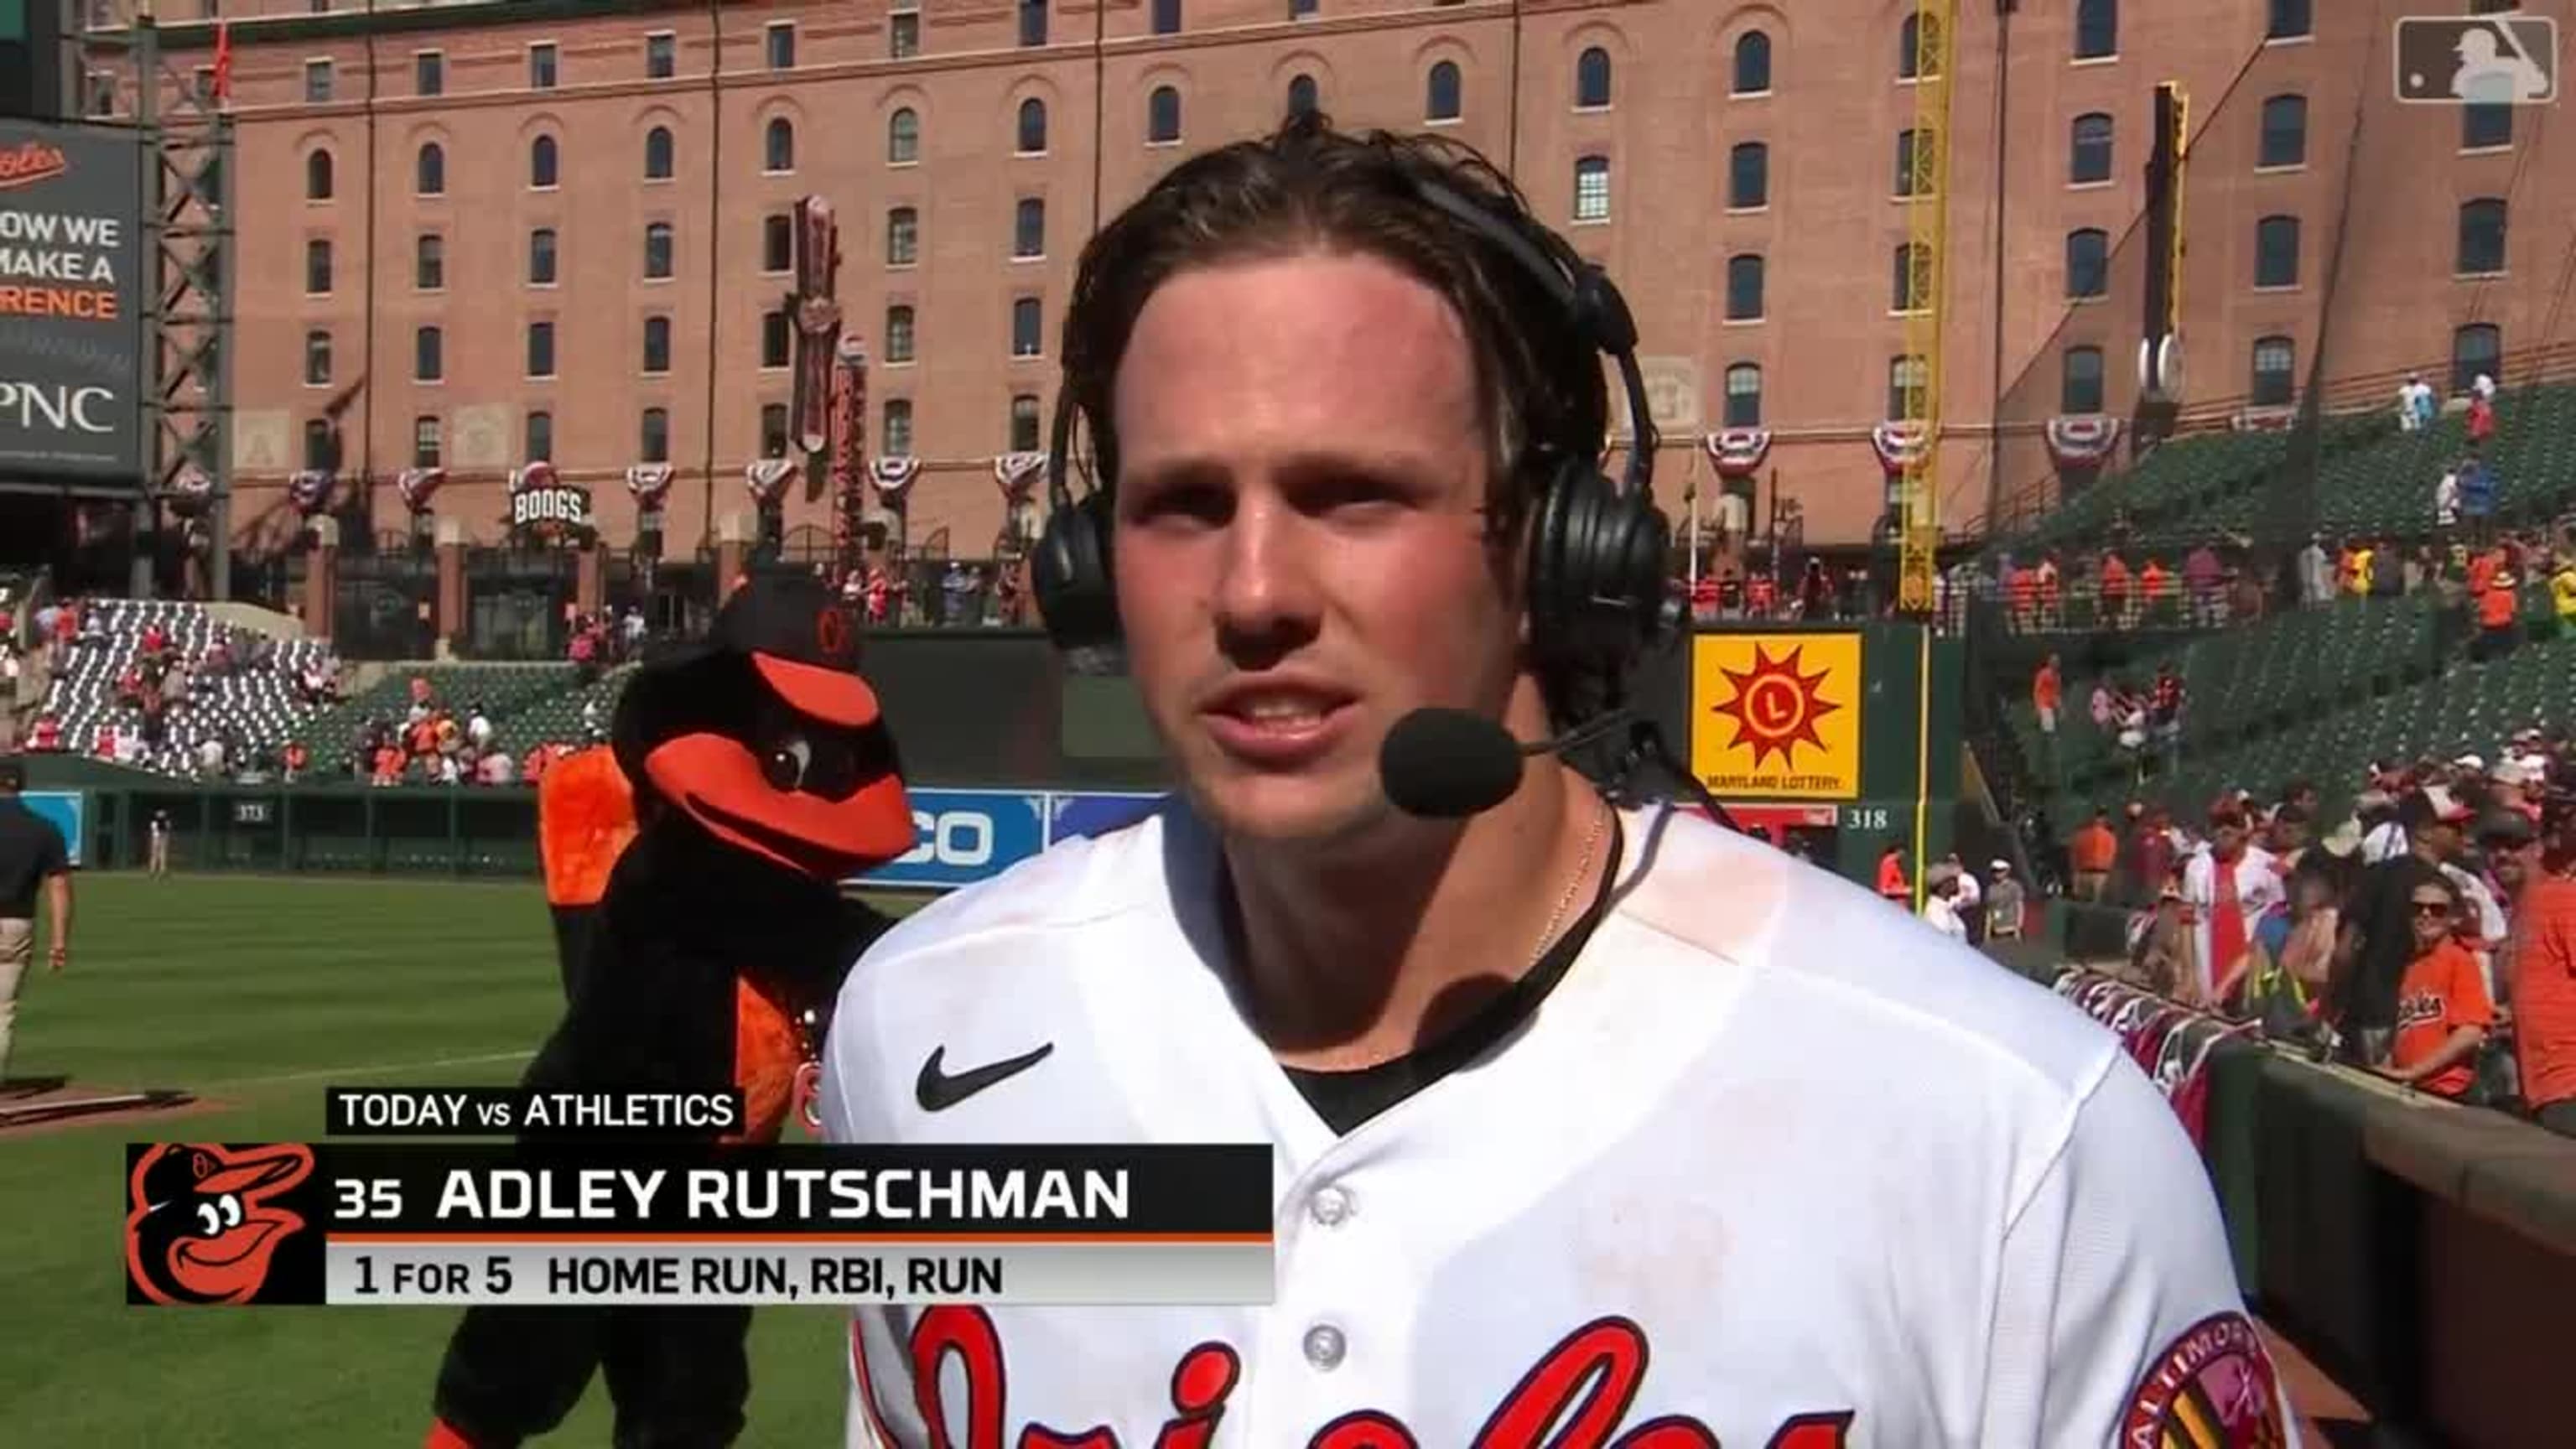 Orioles TV had incredible graphic about Adley Rutschman